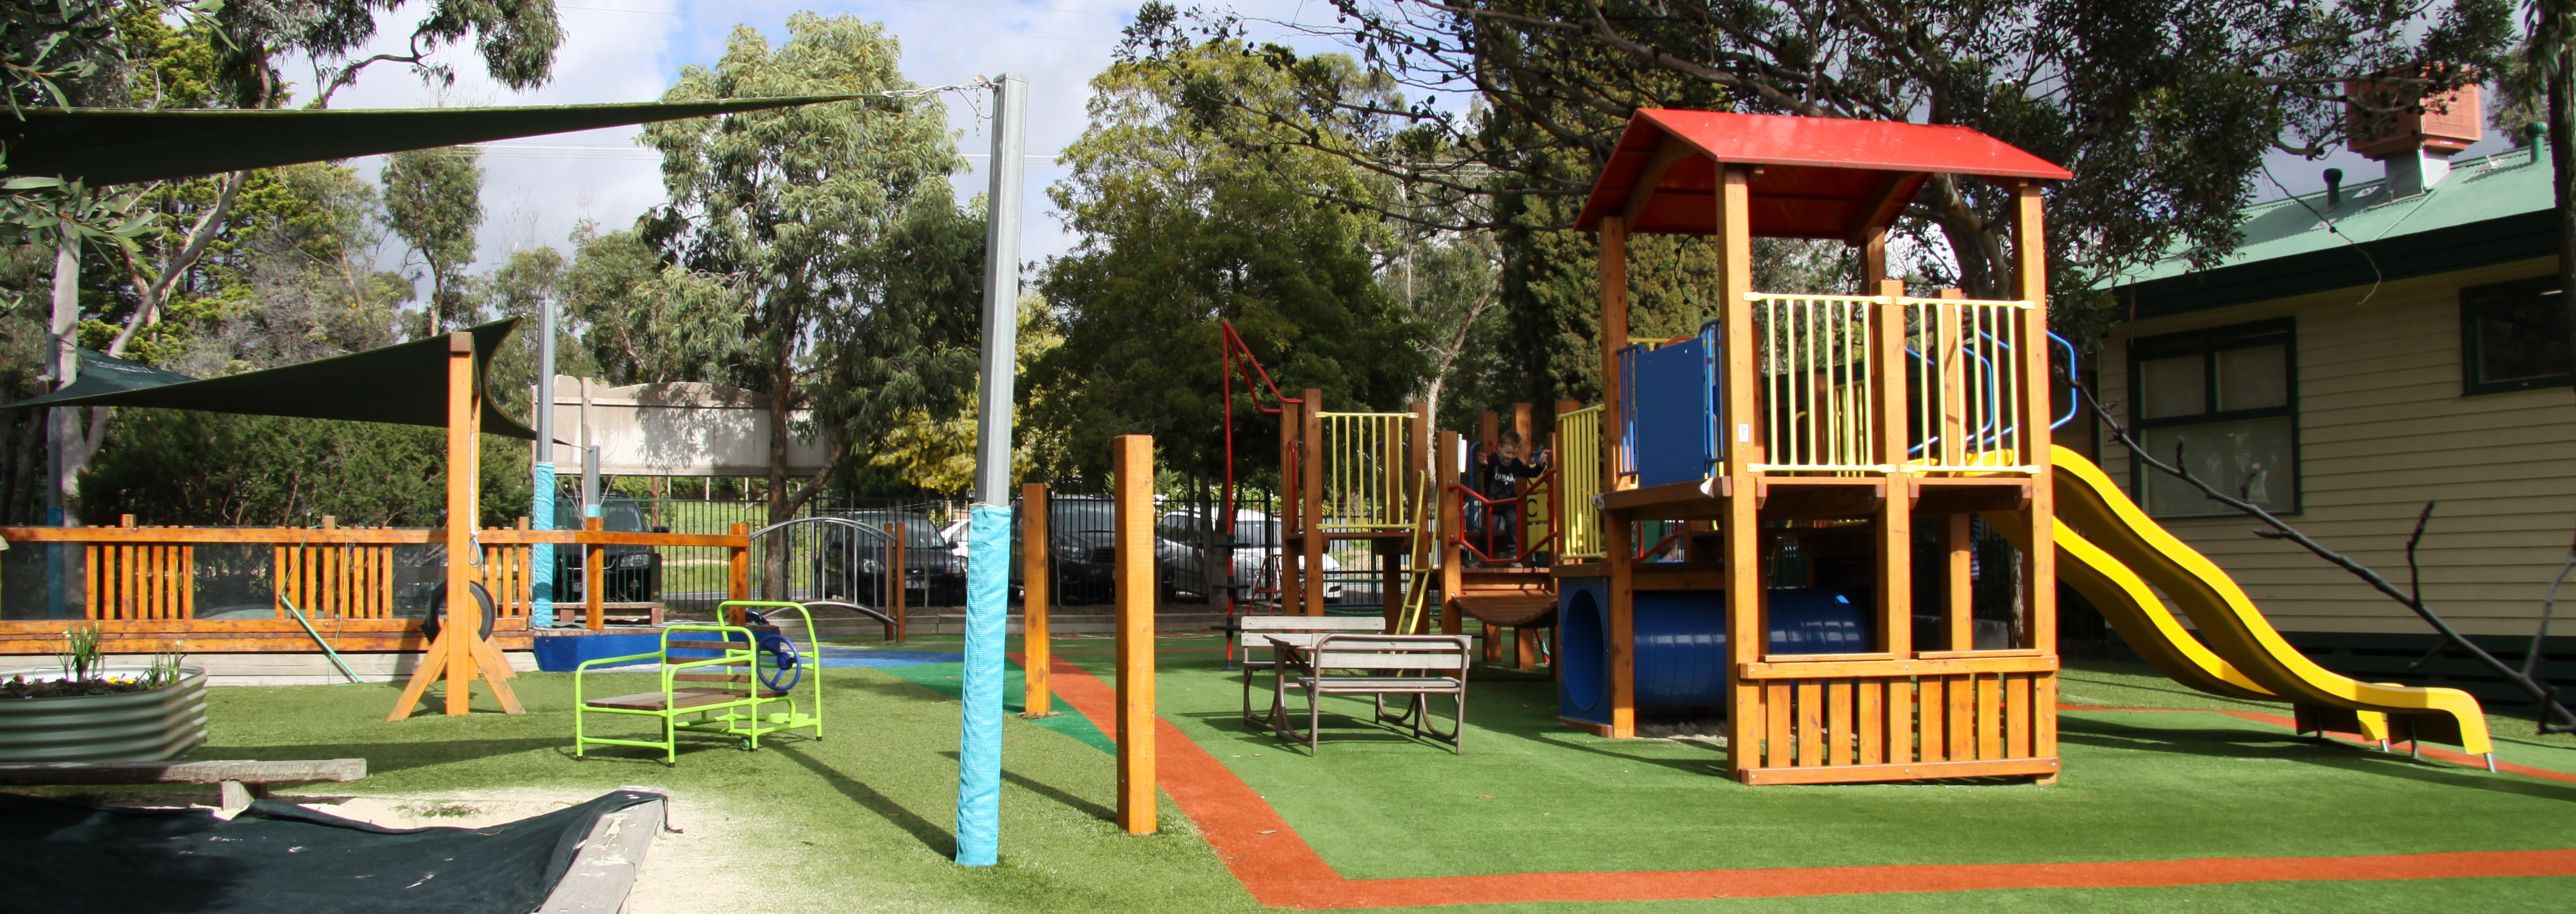 Our outdoor play area | Yarrambat Preschool